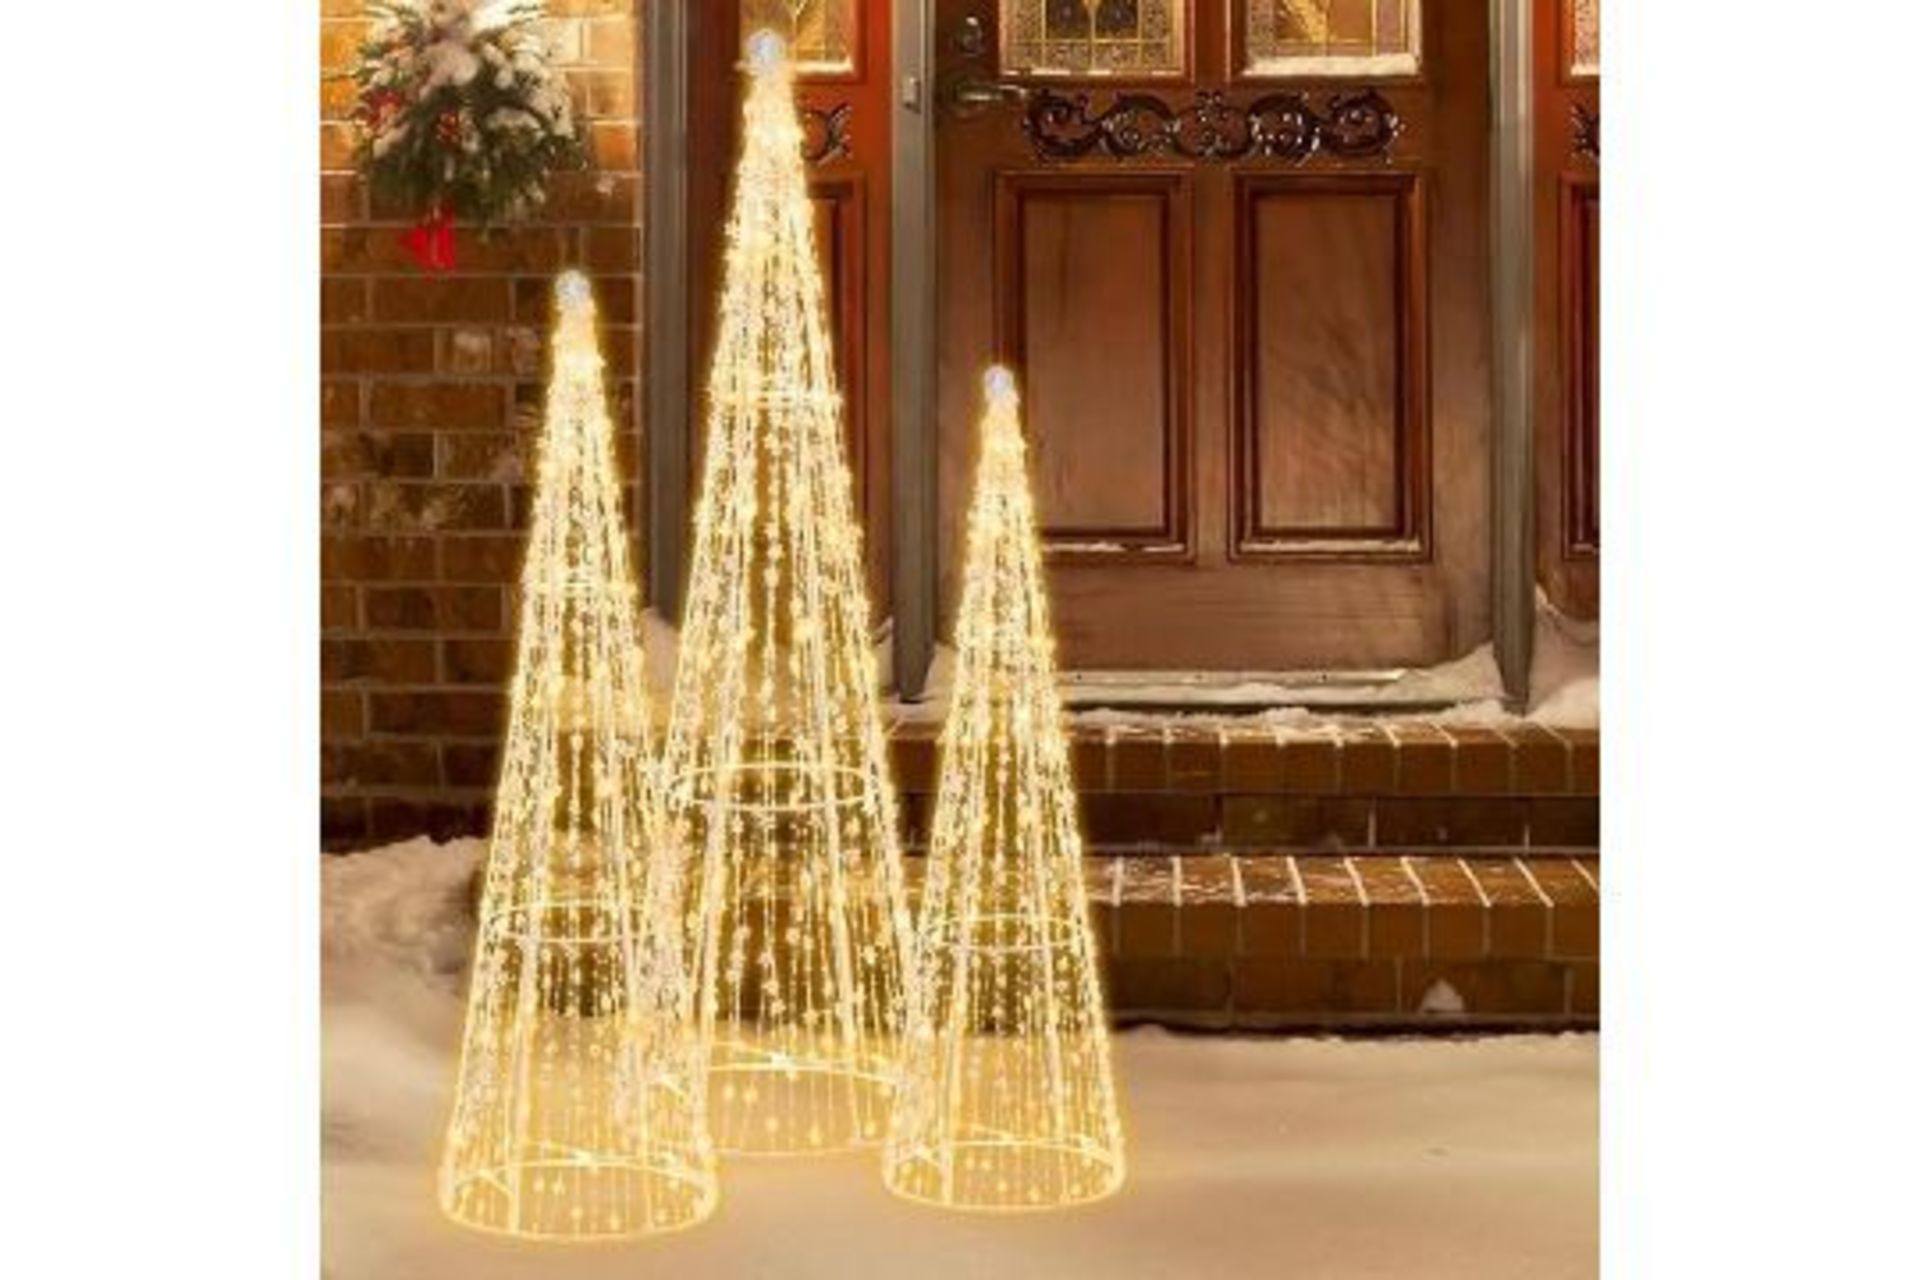 Multigot Set of 3 Lighted Christmas Trees, Festival Cone Xmas Trees with Star Strings, Pre-Lit